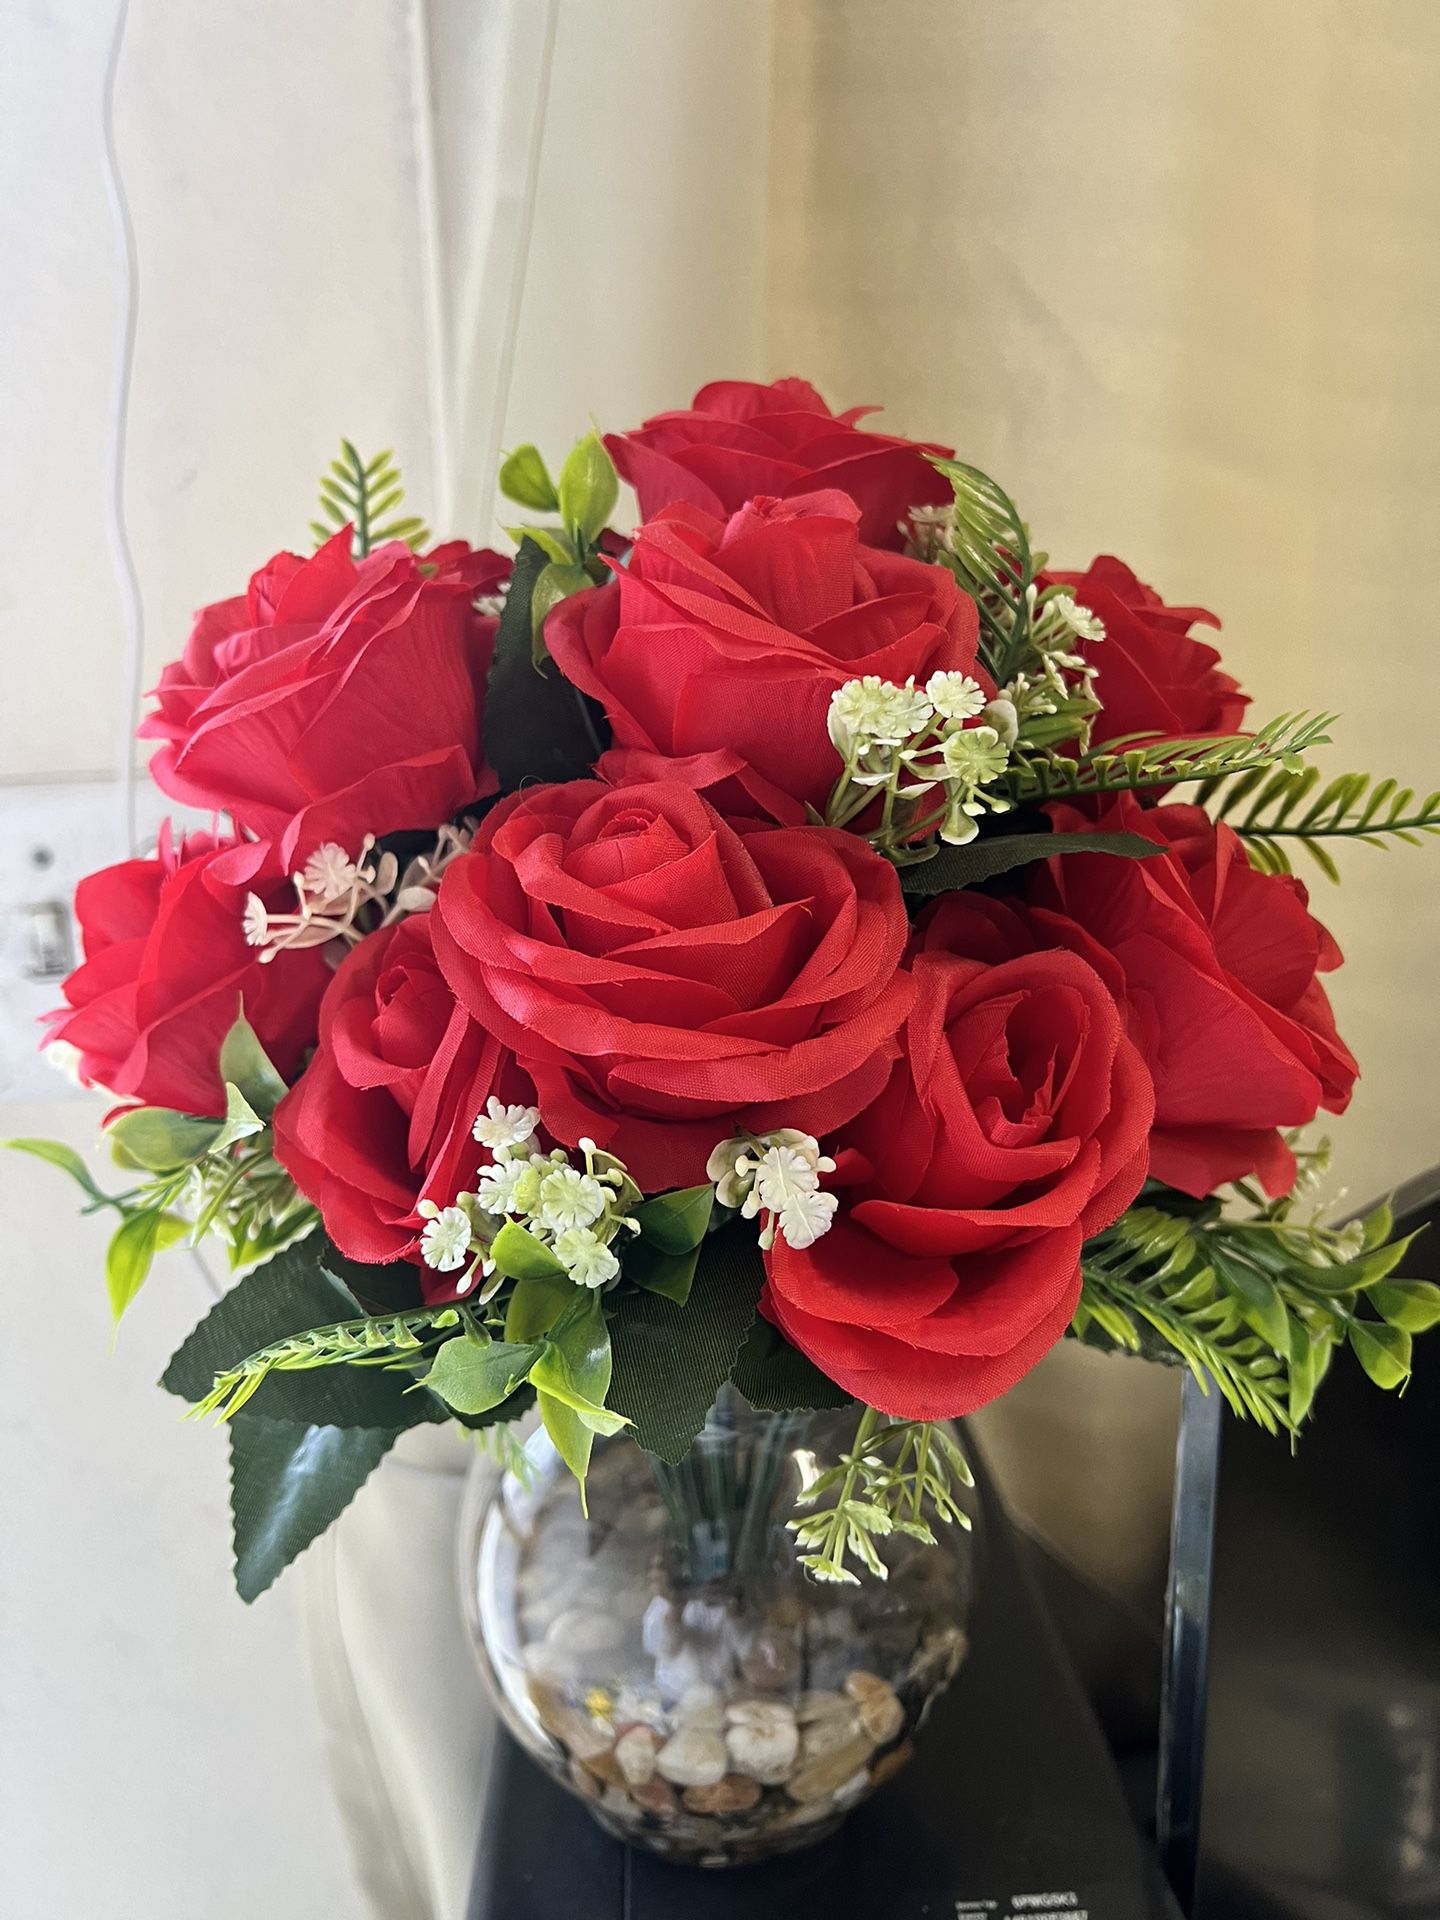 Rose Flowers Gift Ideas